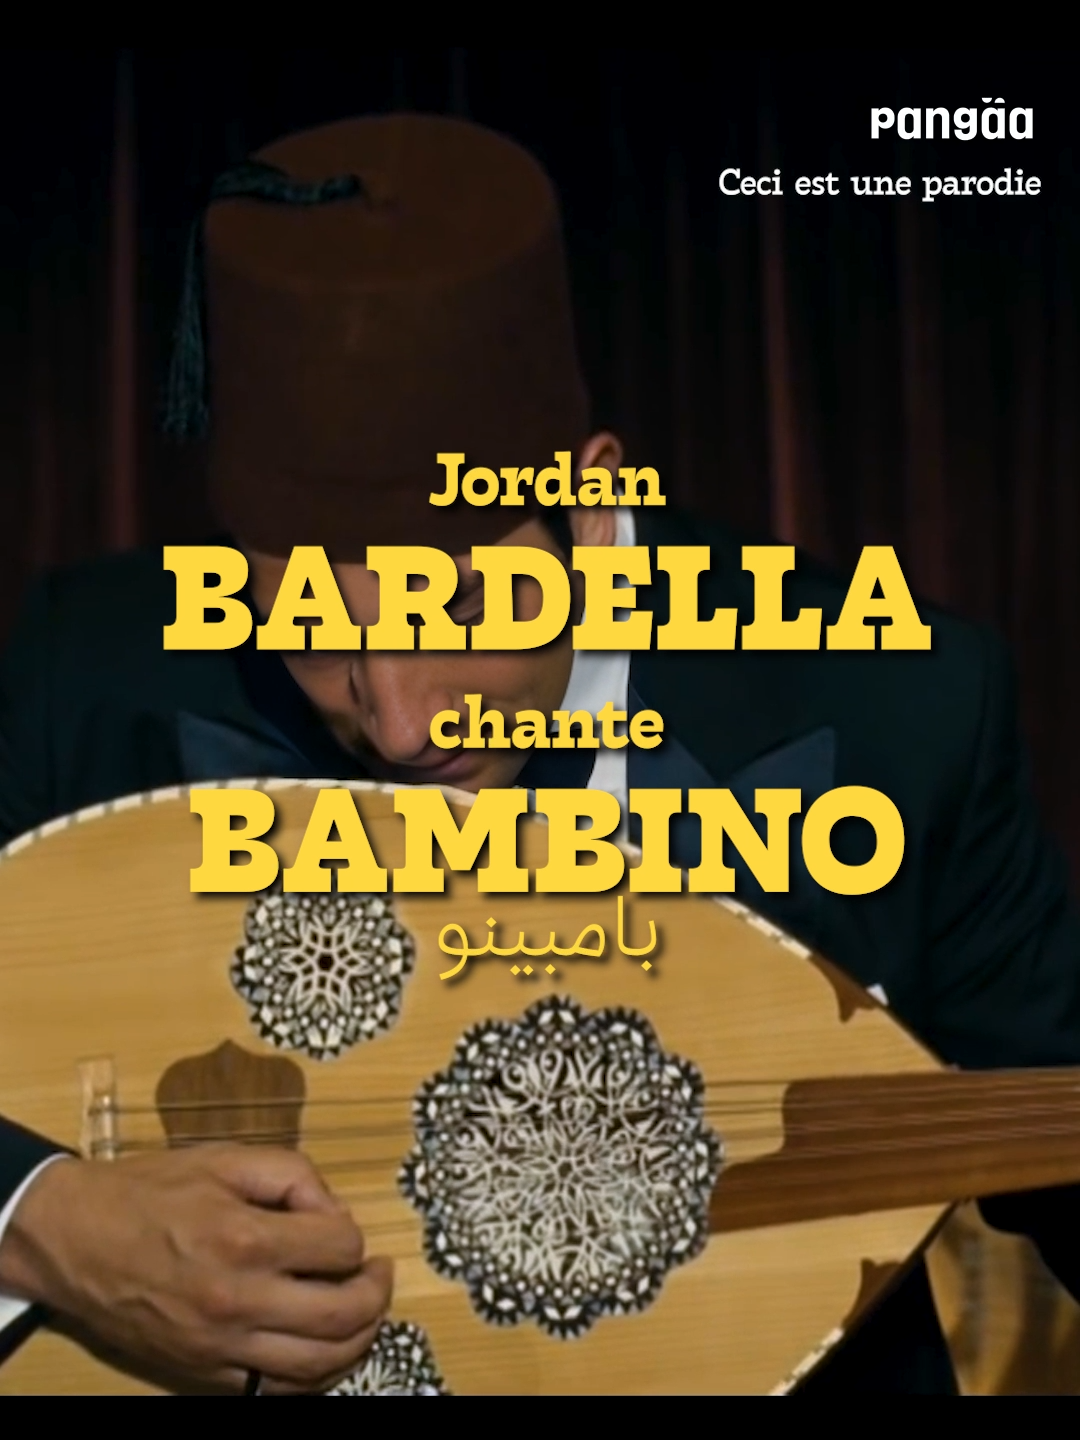 Jordan Bardella chante Bambino 🪕 (parodie OSS 117)  #frontpopulaire #nouveaufrontpopuplaire #oss117 #dalida #bardella